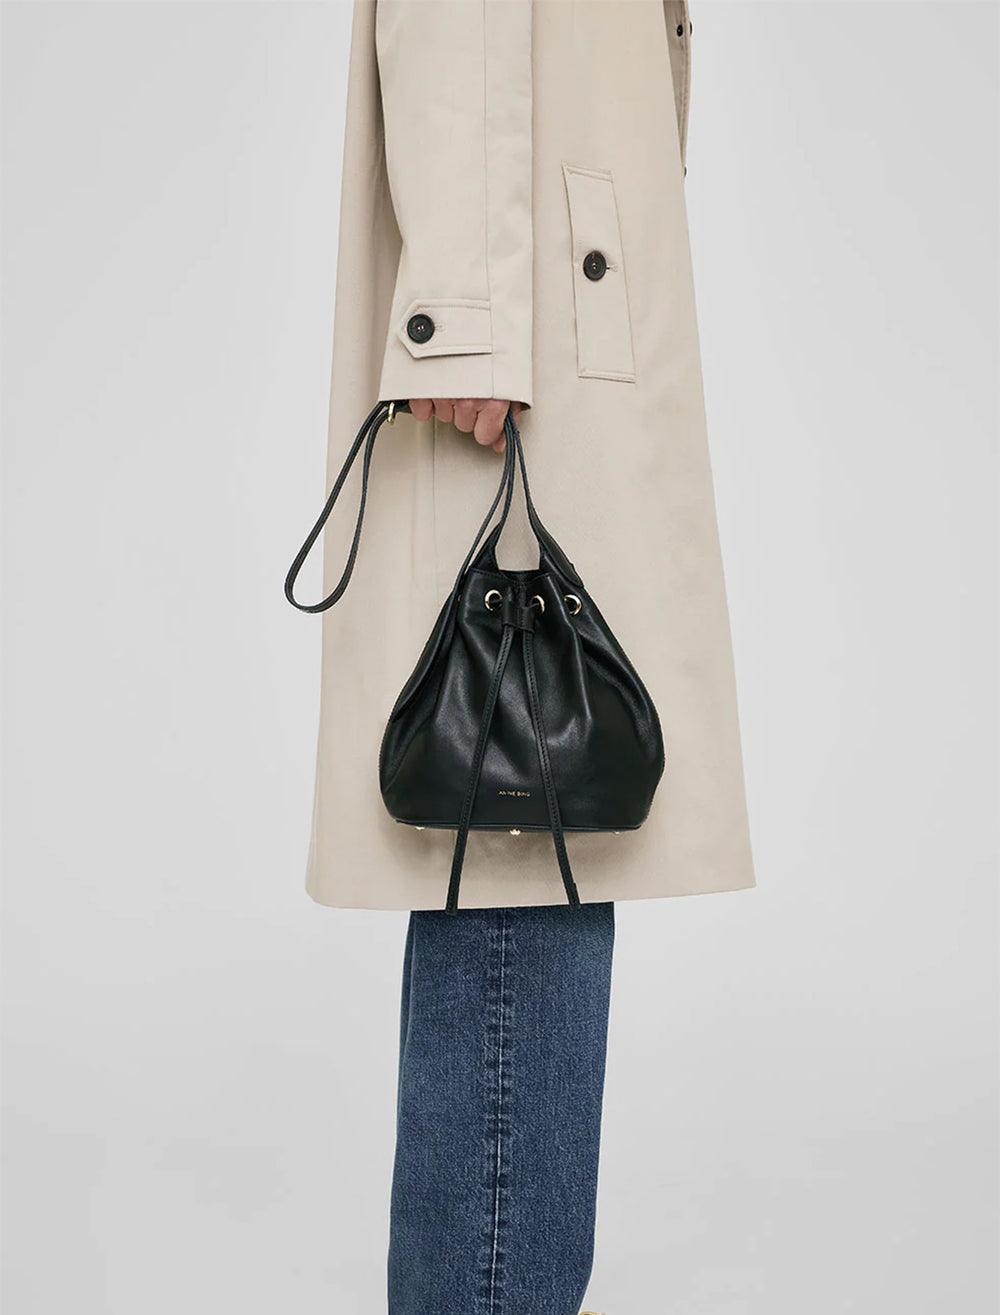 Model carrying Anine Bing's alana mini bucket bag in black.